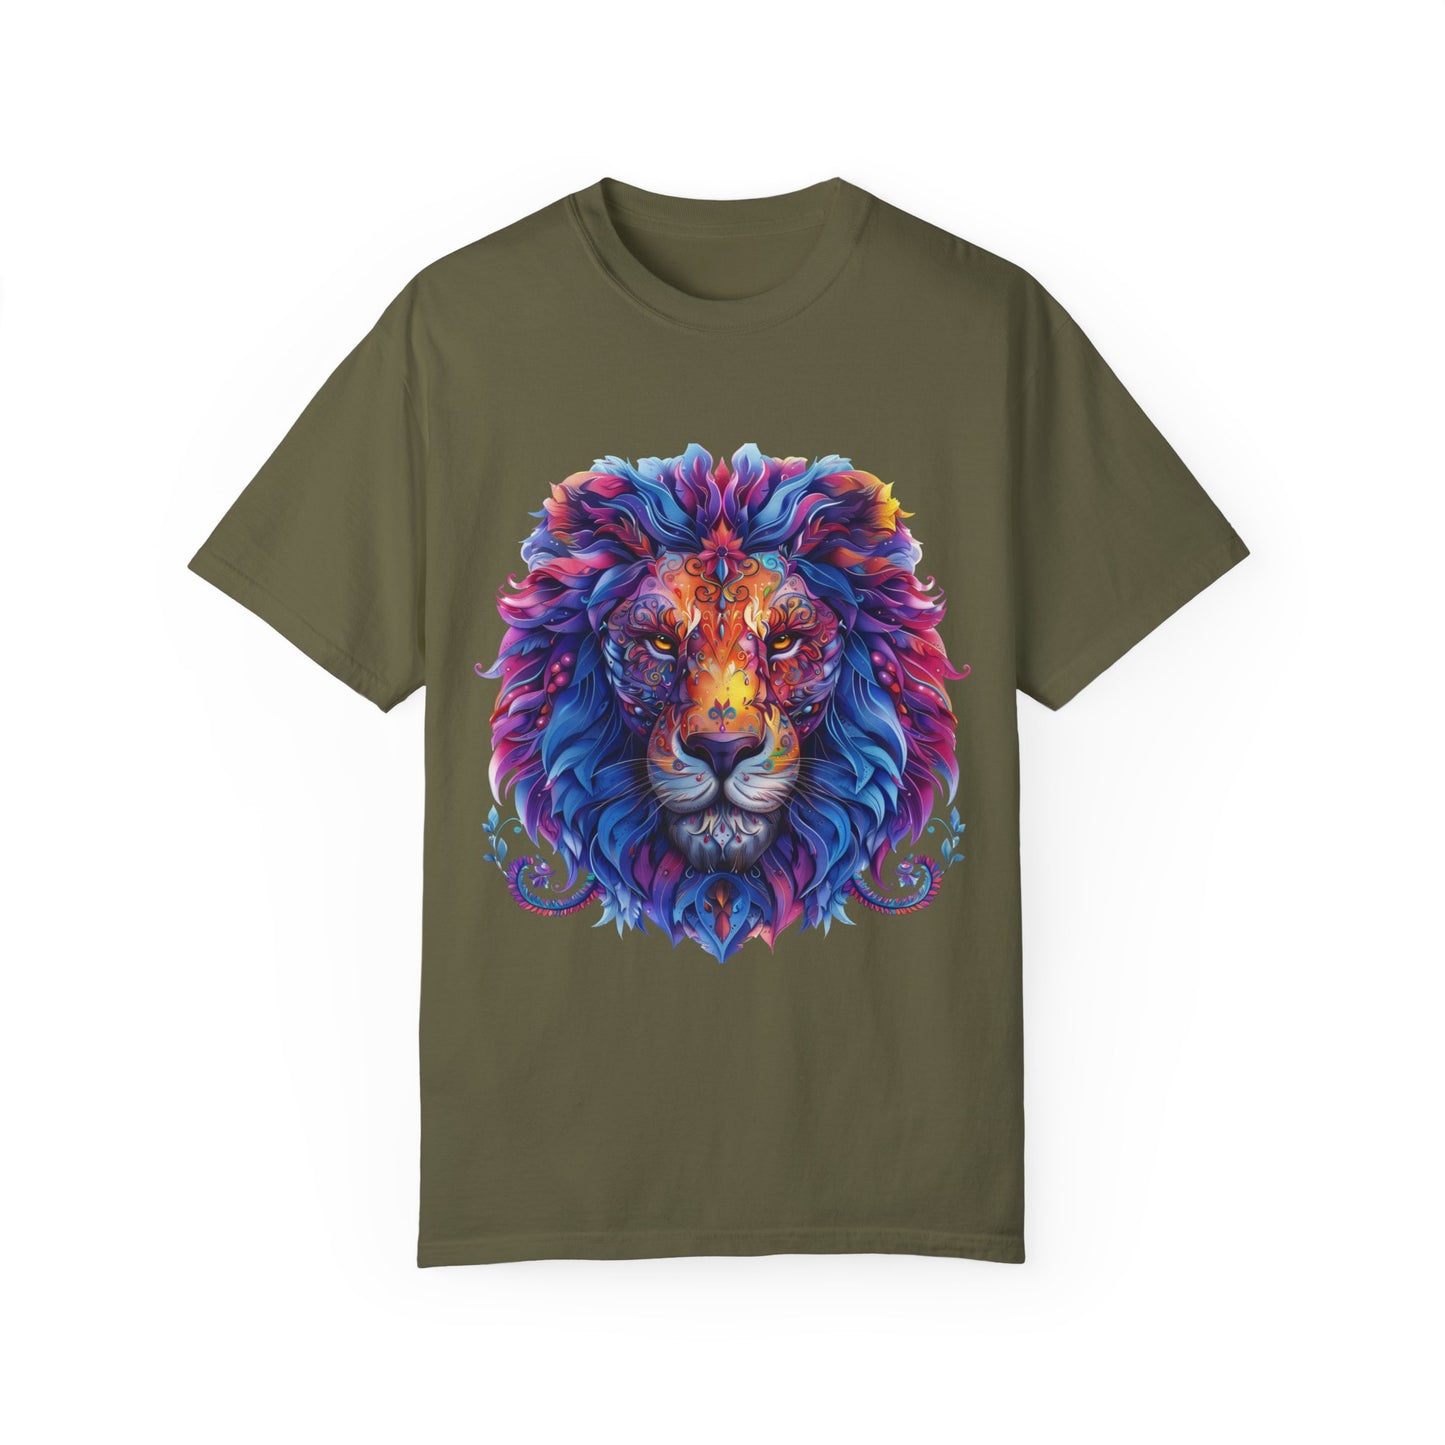 Lion Head Cool Graphic Design Novelty Unisex Garment-dyed T-shirt Cotton Funny Humorous Graphic Soft Premium Unisex Men Women Sage T-shirt Birthday Gift-13